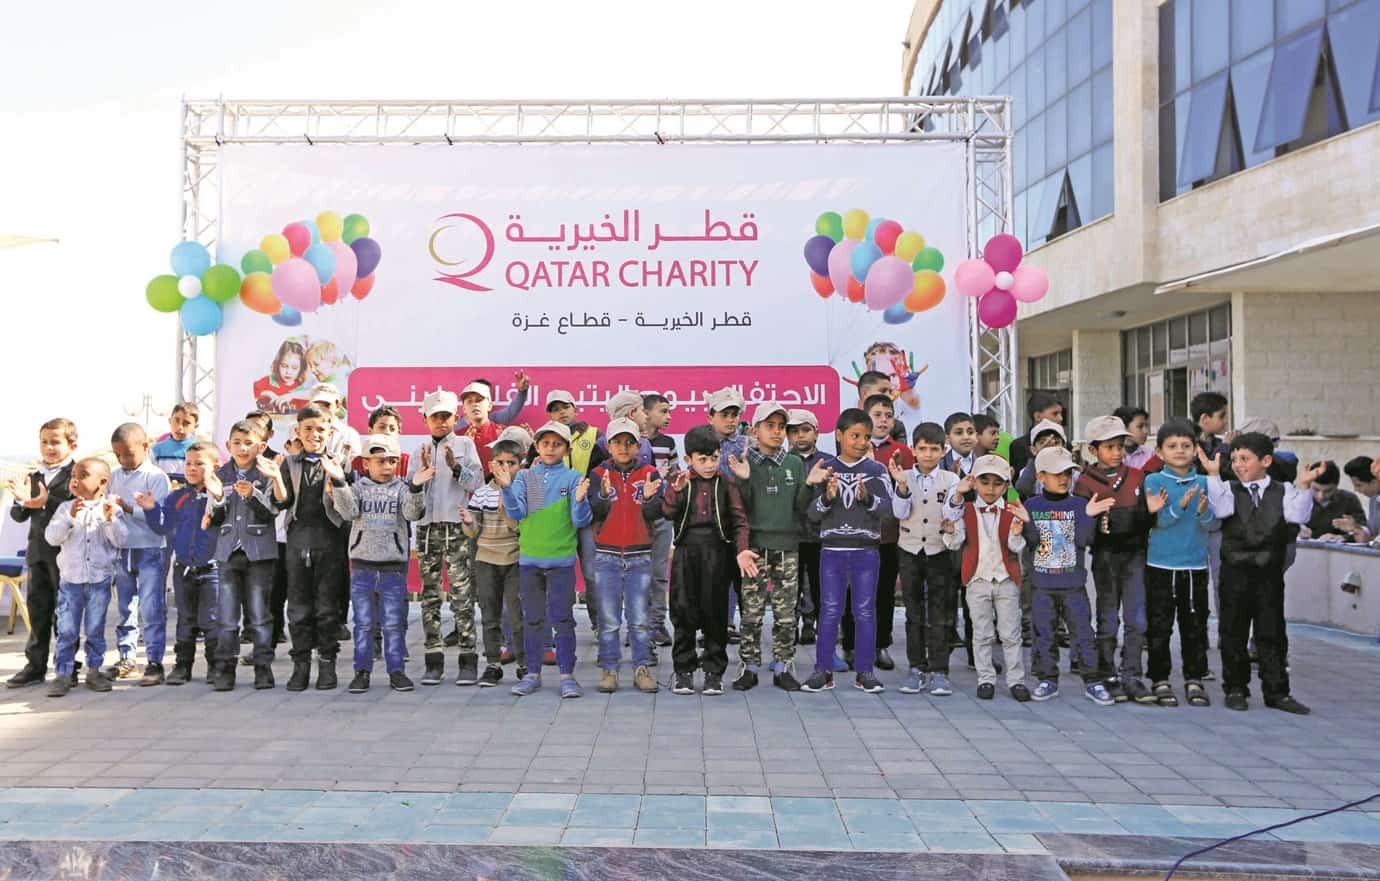 Qatar Charity sponsors over 150,000 orphans worldwide